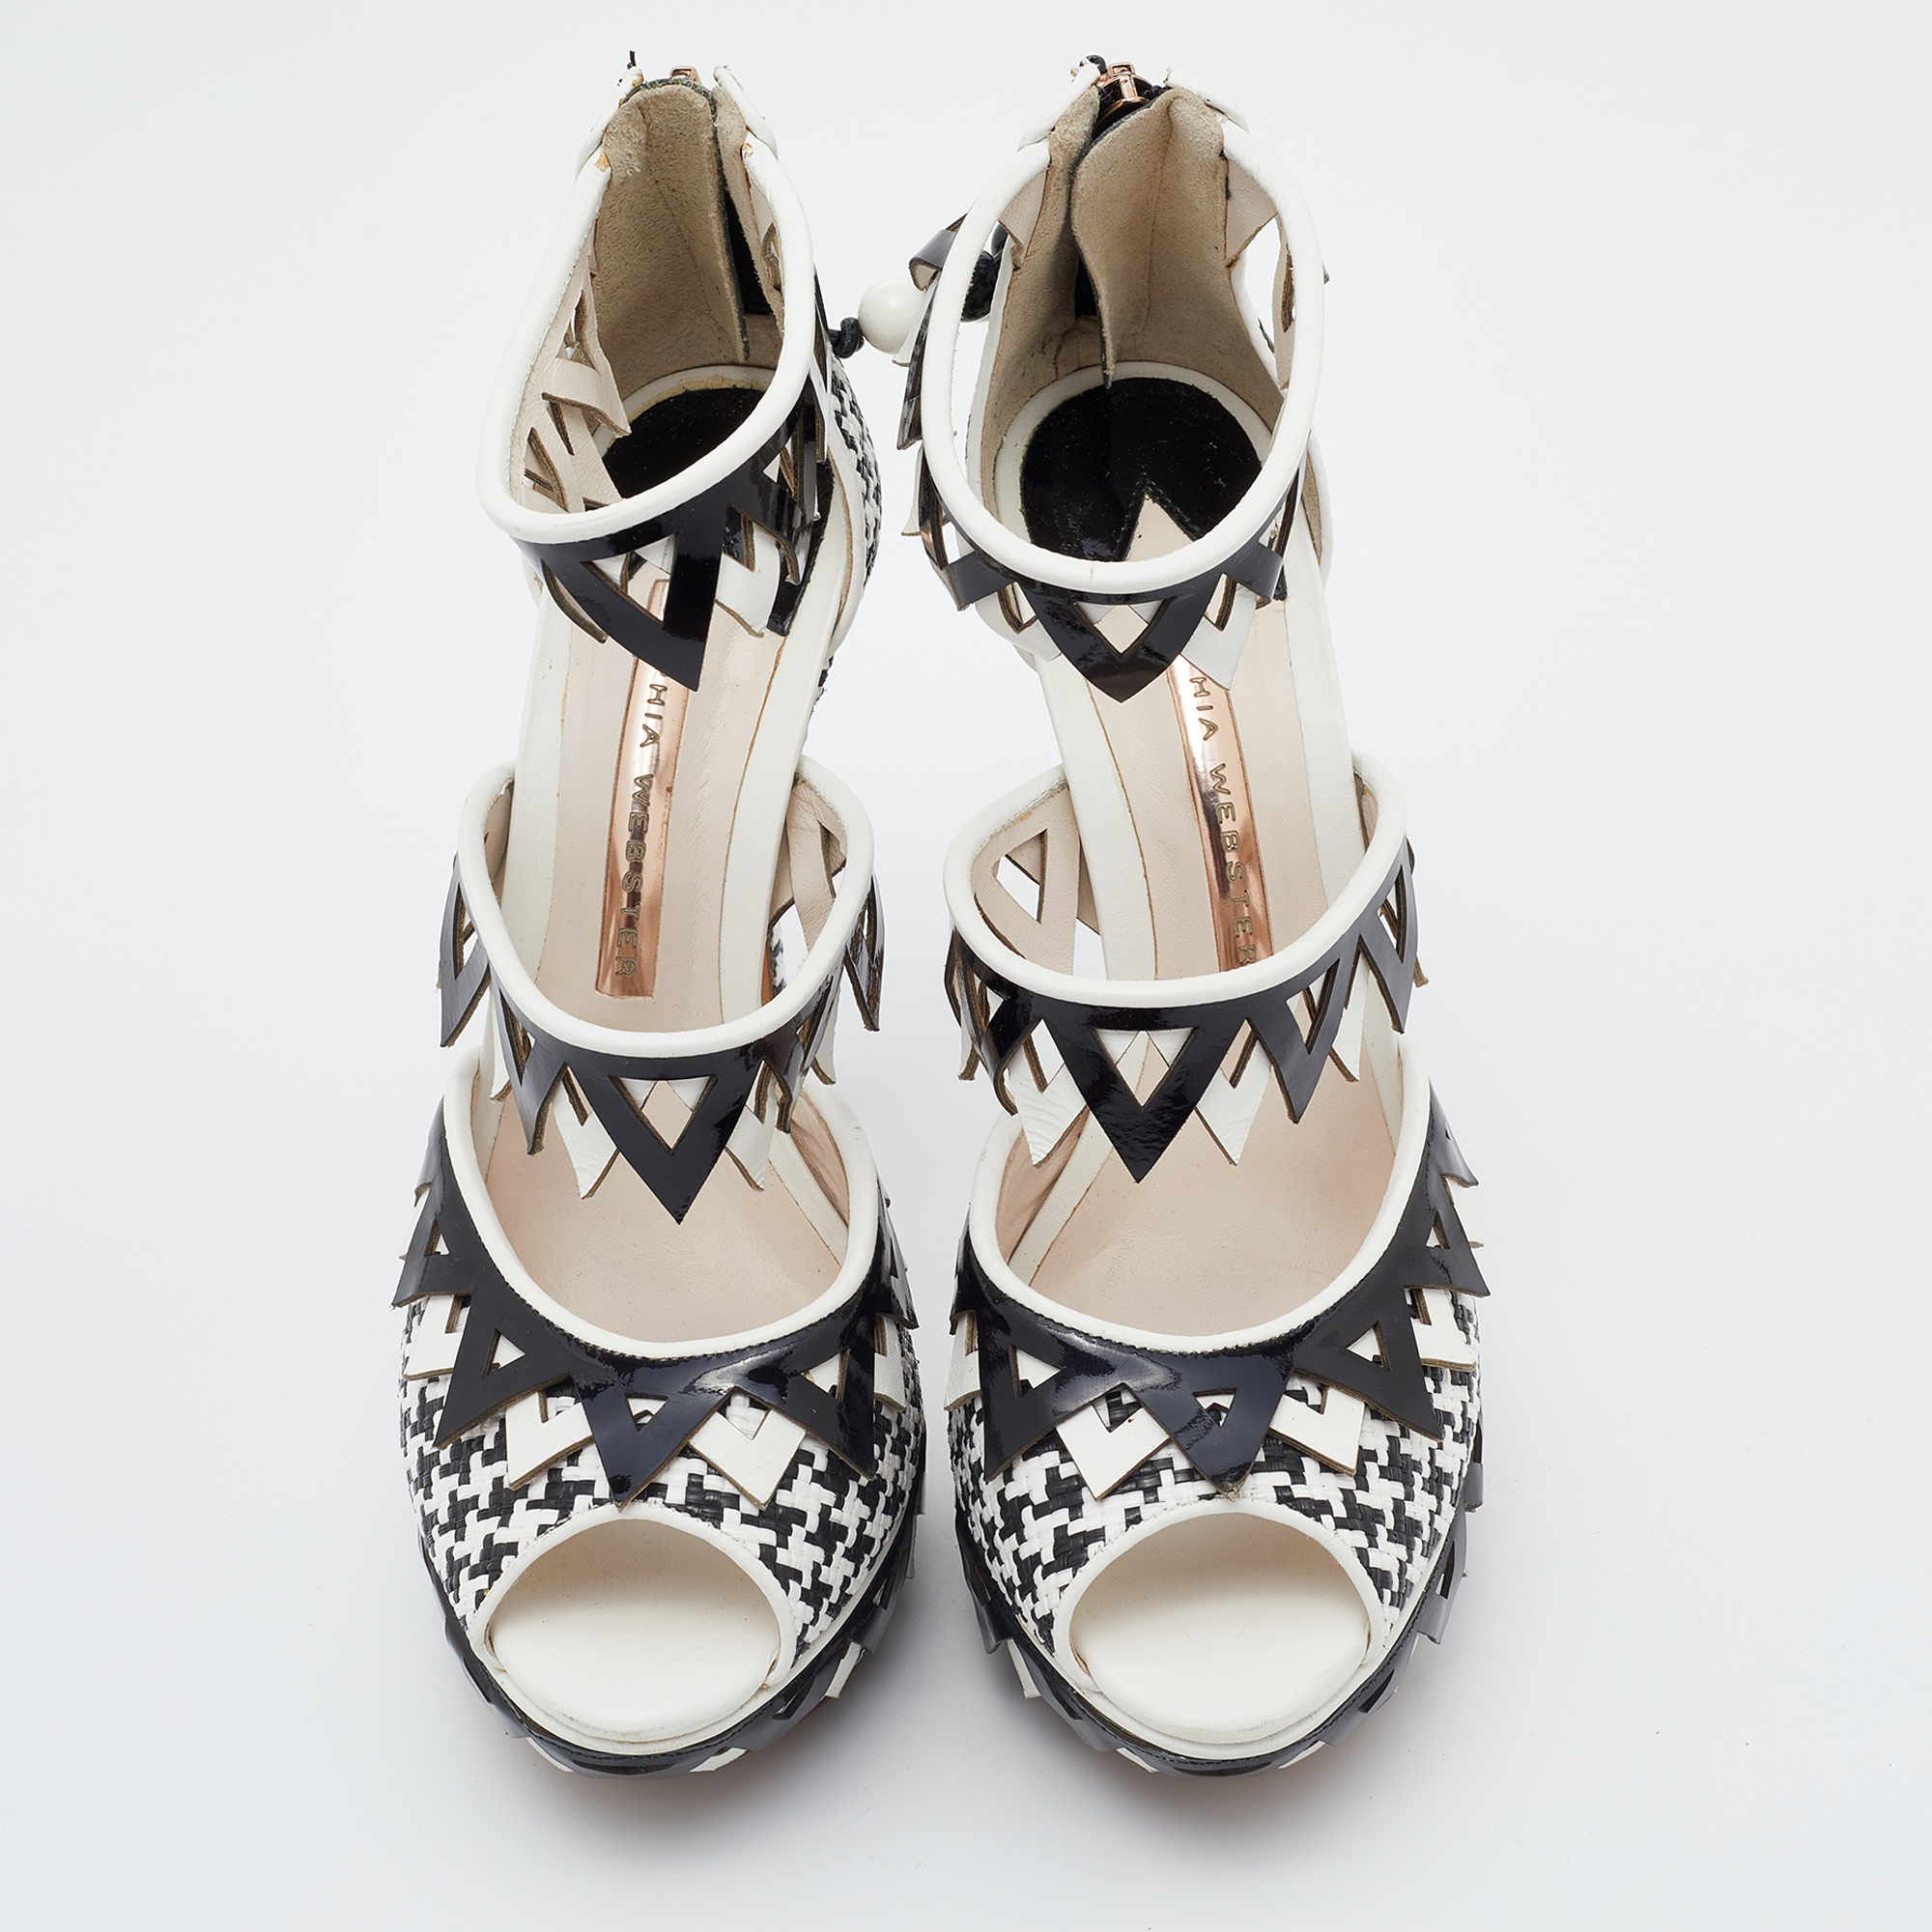 Sophia Webster Black/White Woven Raffia And Leather Platform Ankle Strap Sandals Size 36